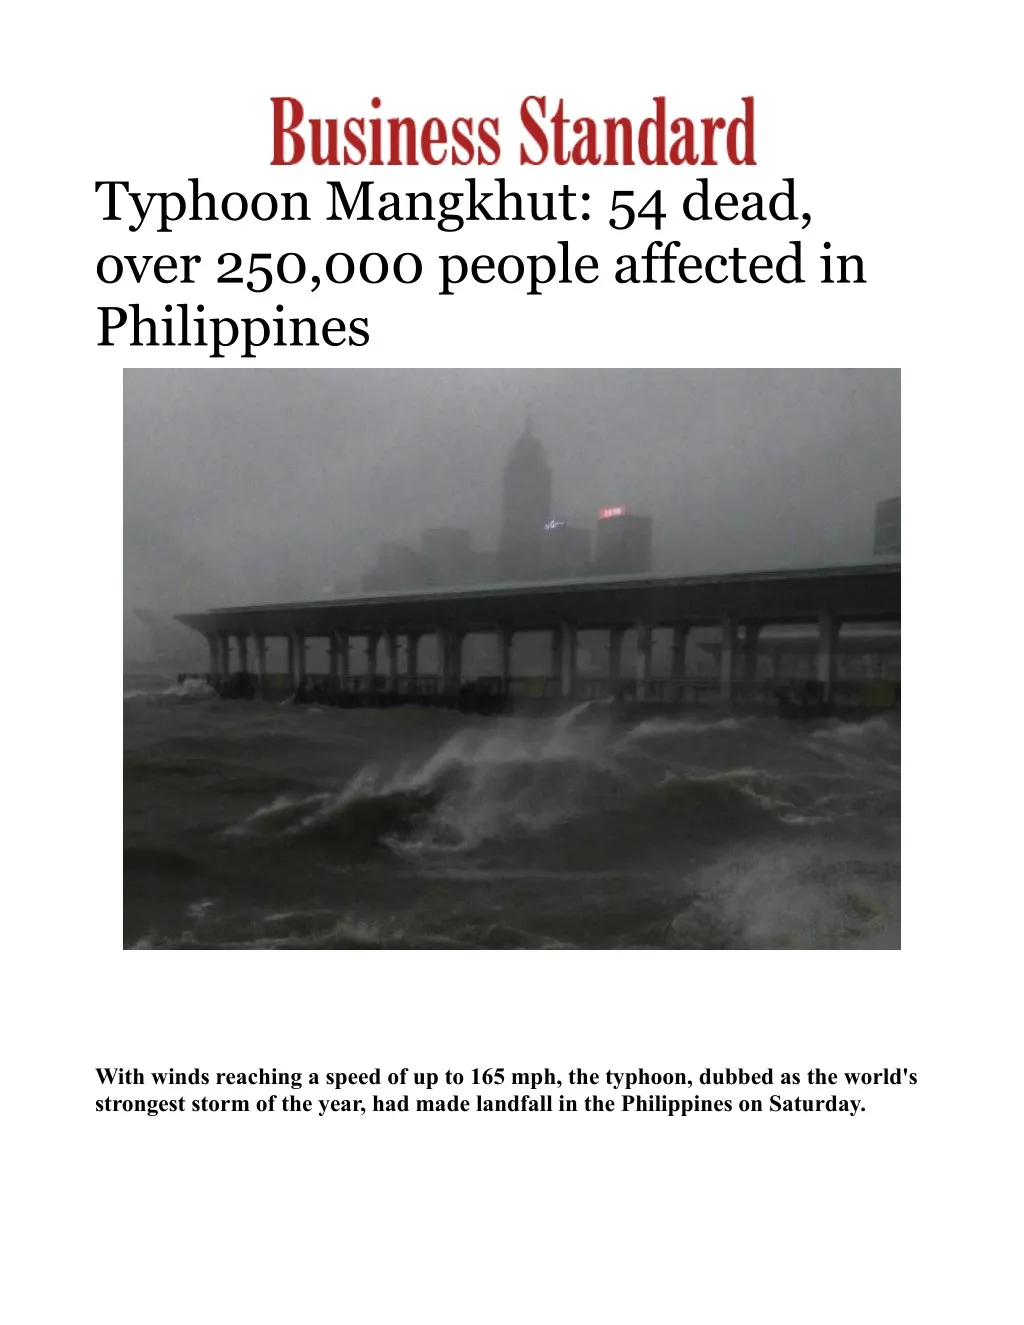 typhoon mangkhut 54 dead over 250 000 people